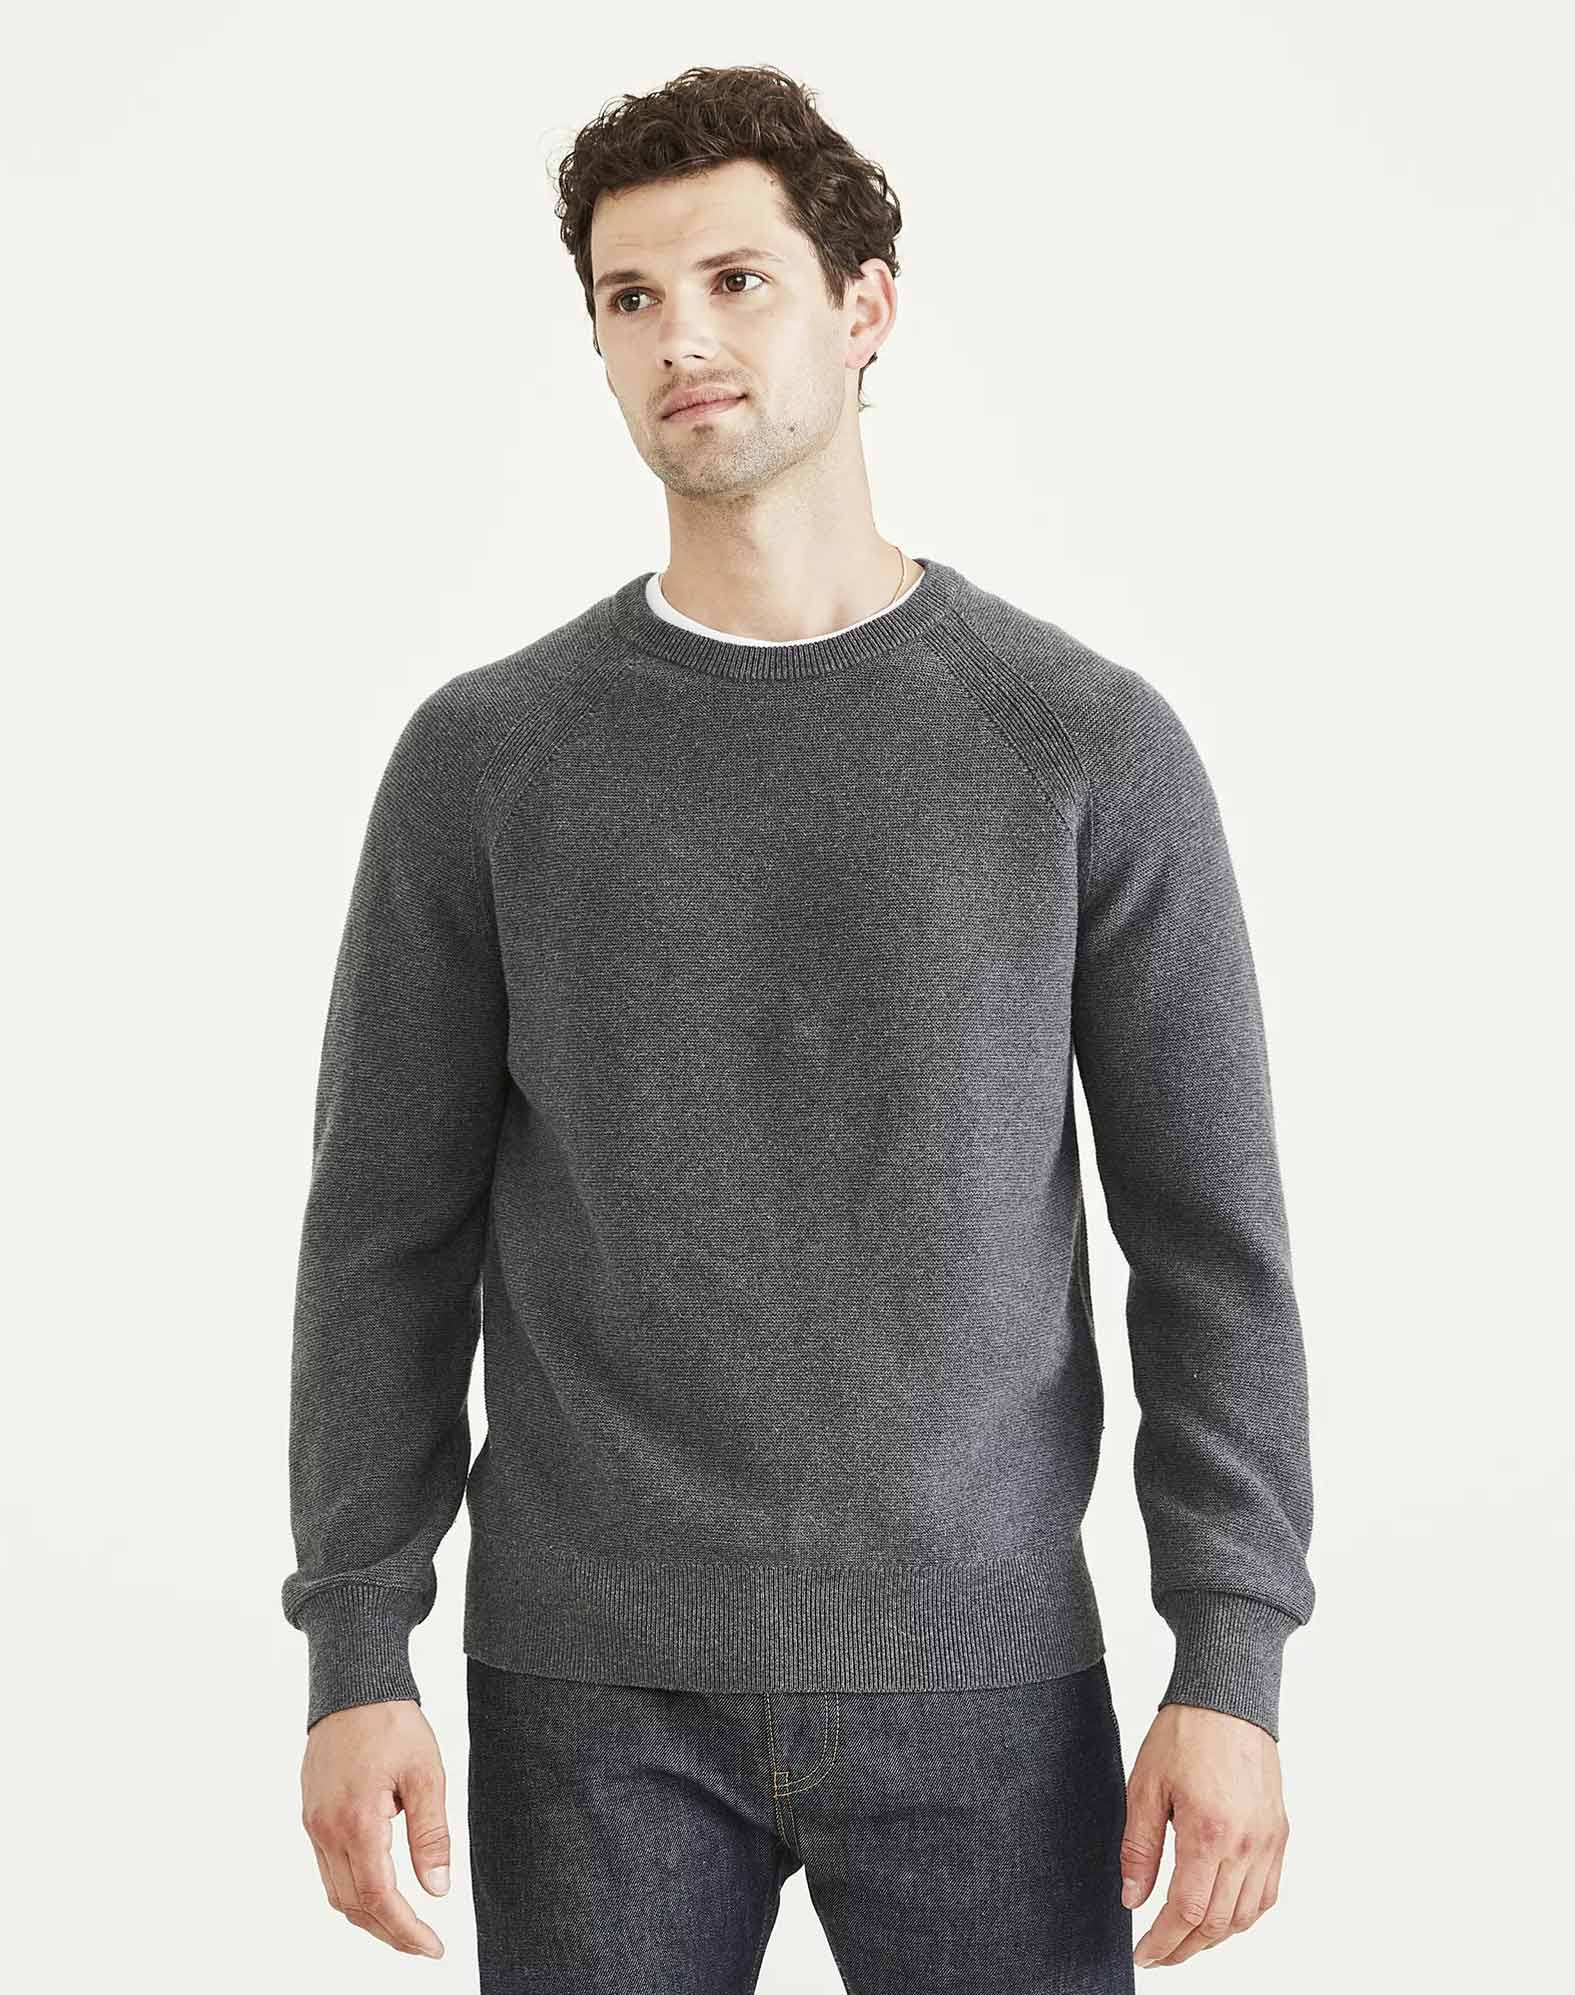 Dockers jersei d'home de coll rodó A1105-0027 gris